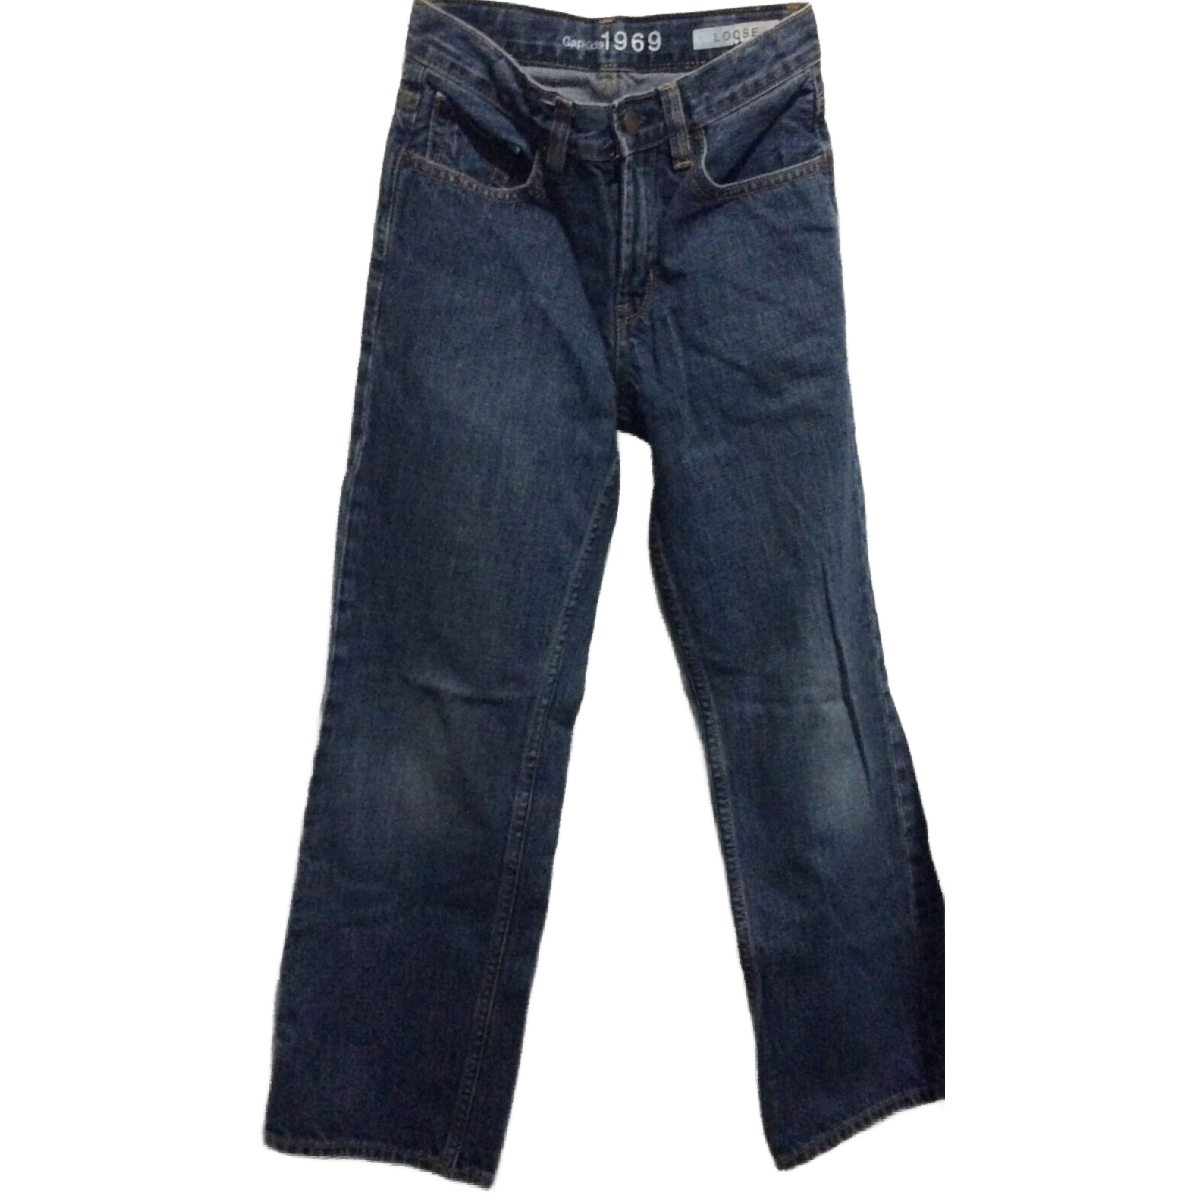 Kids Gap 1969 Denim Jeans Loose Boys Size 10 Slim Fit Adjustable Waist Pants - $17.50